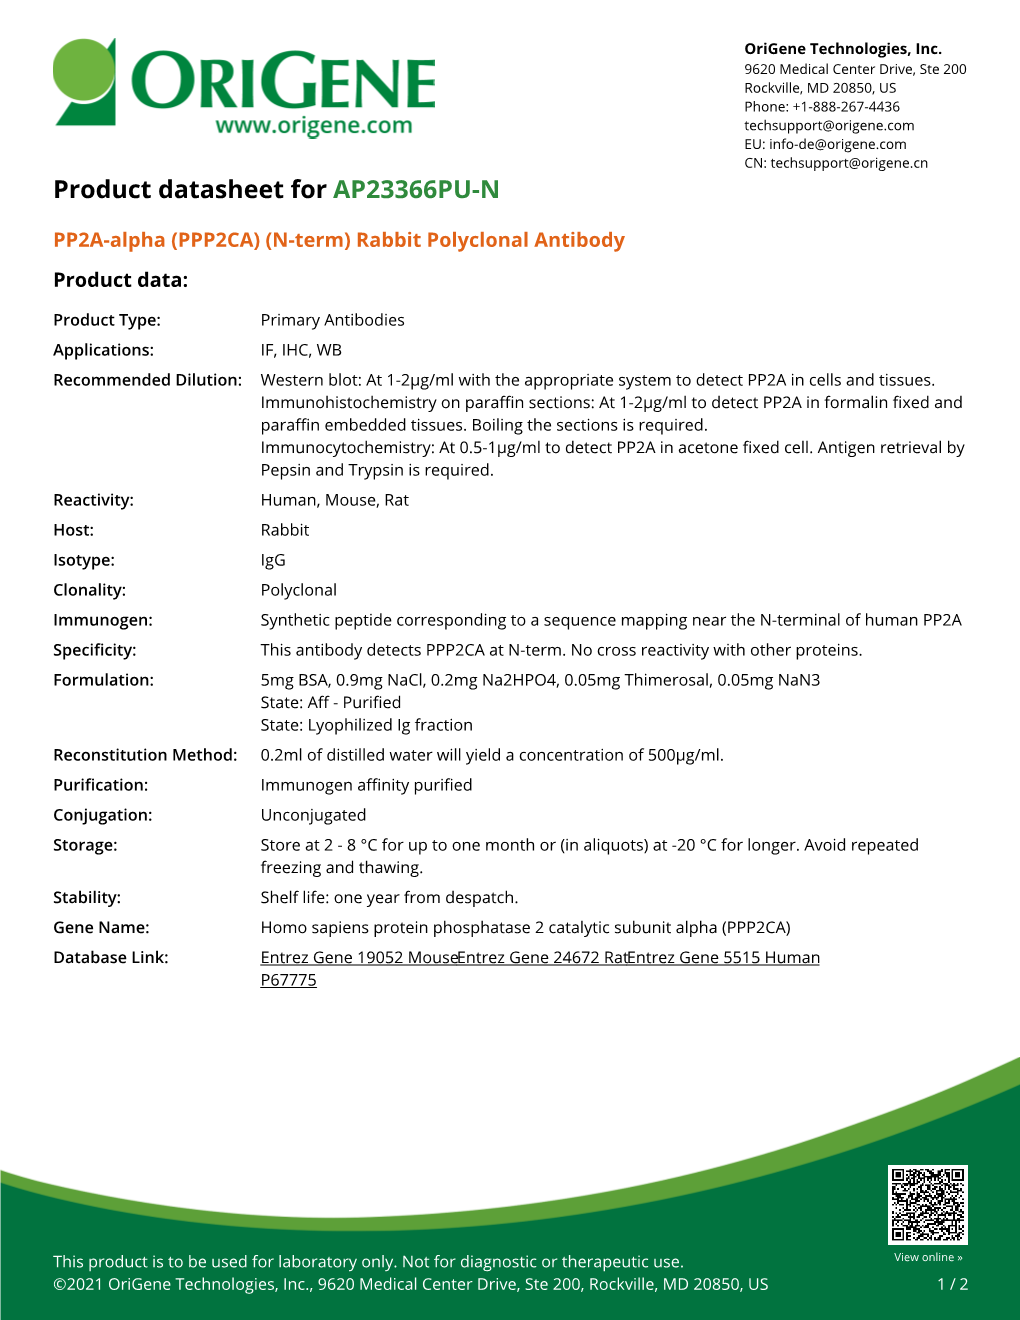 PP2A-Alpha (PPP2CA) (N-Term) Rabbit Polyclonal Antibody Product Data